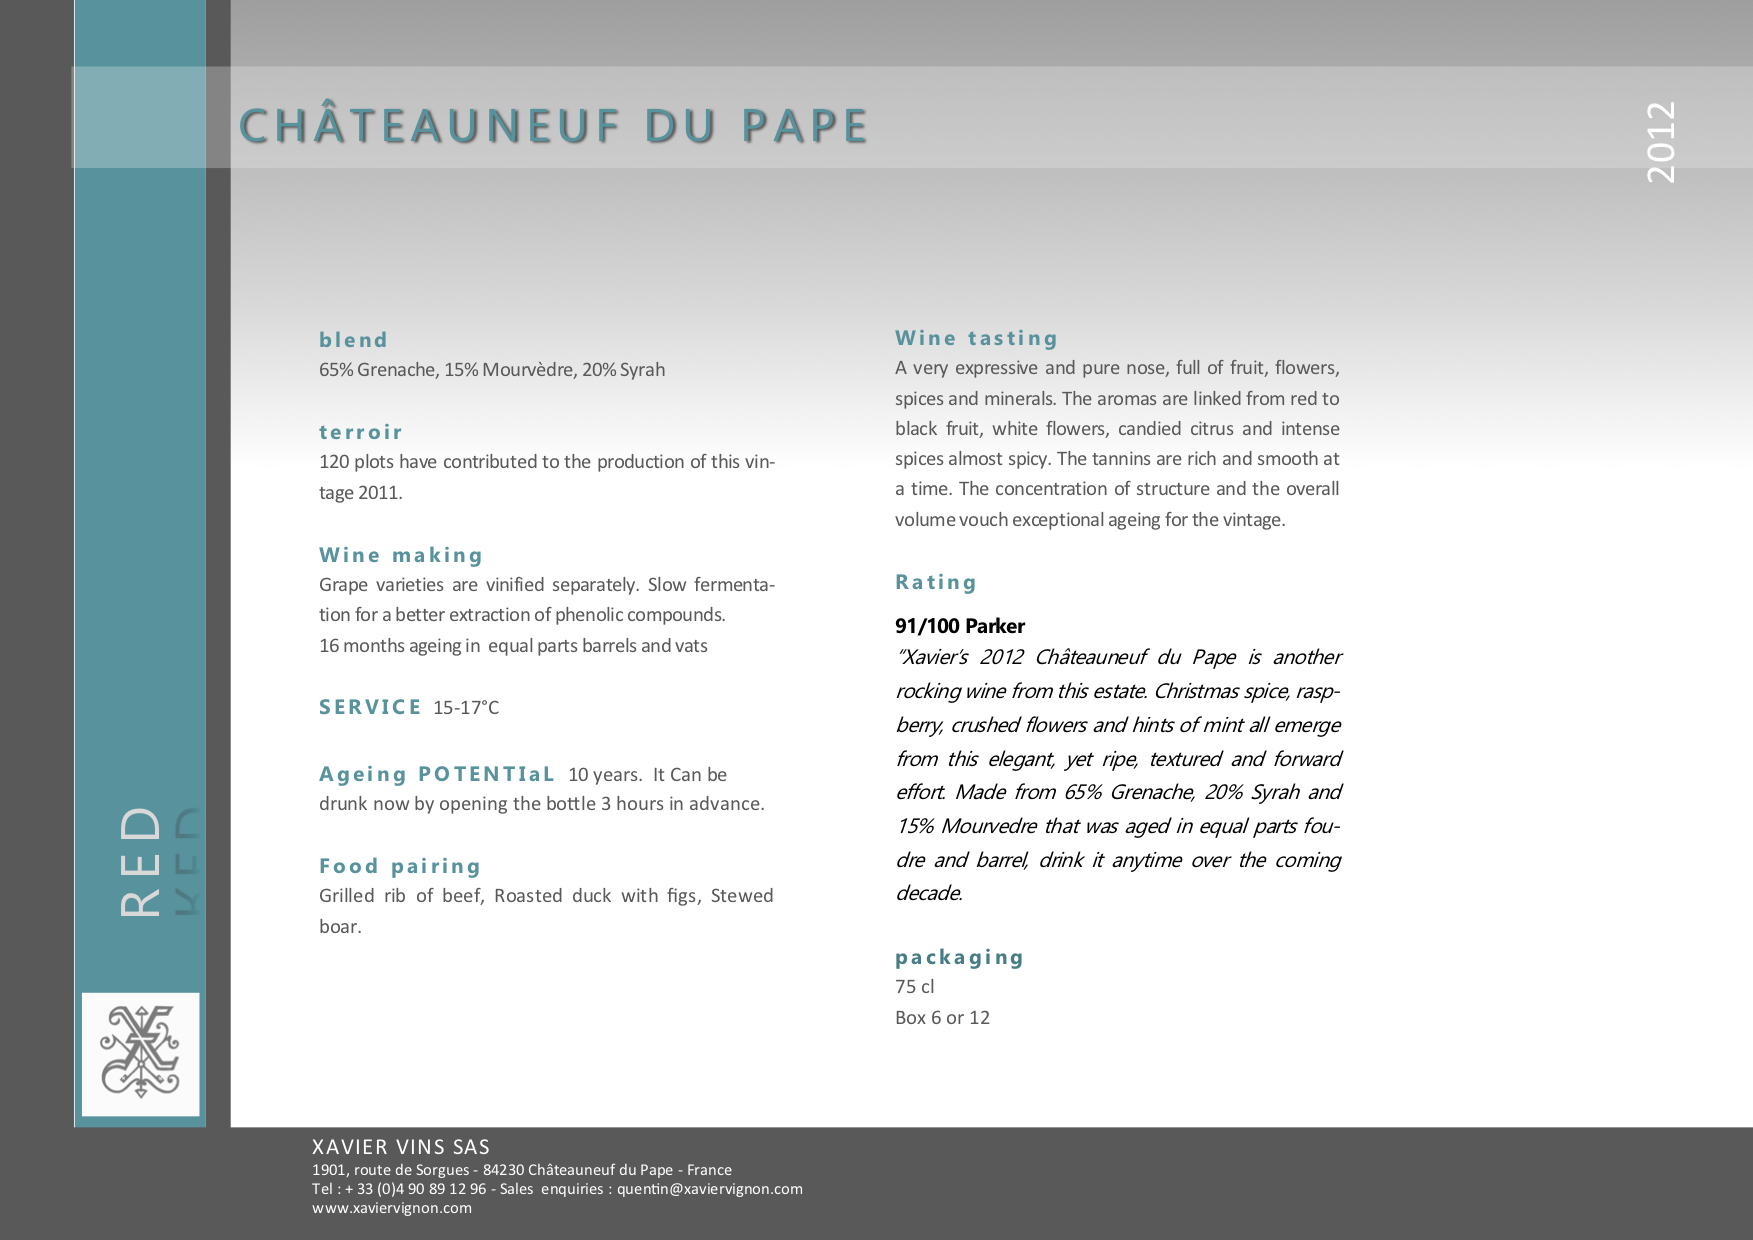 Chateauneuf du Pape 2012